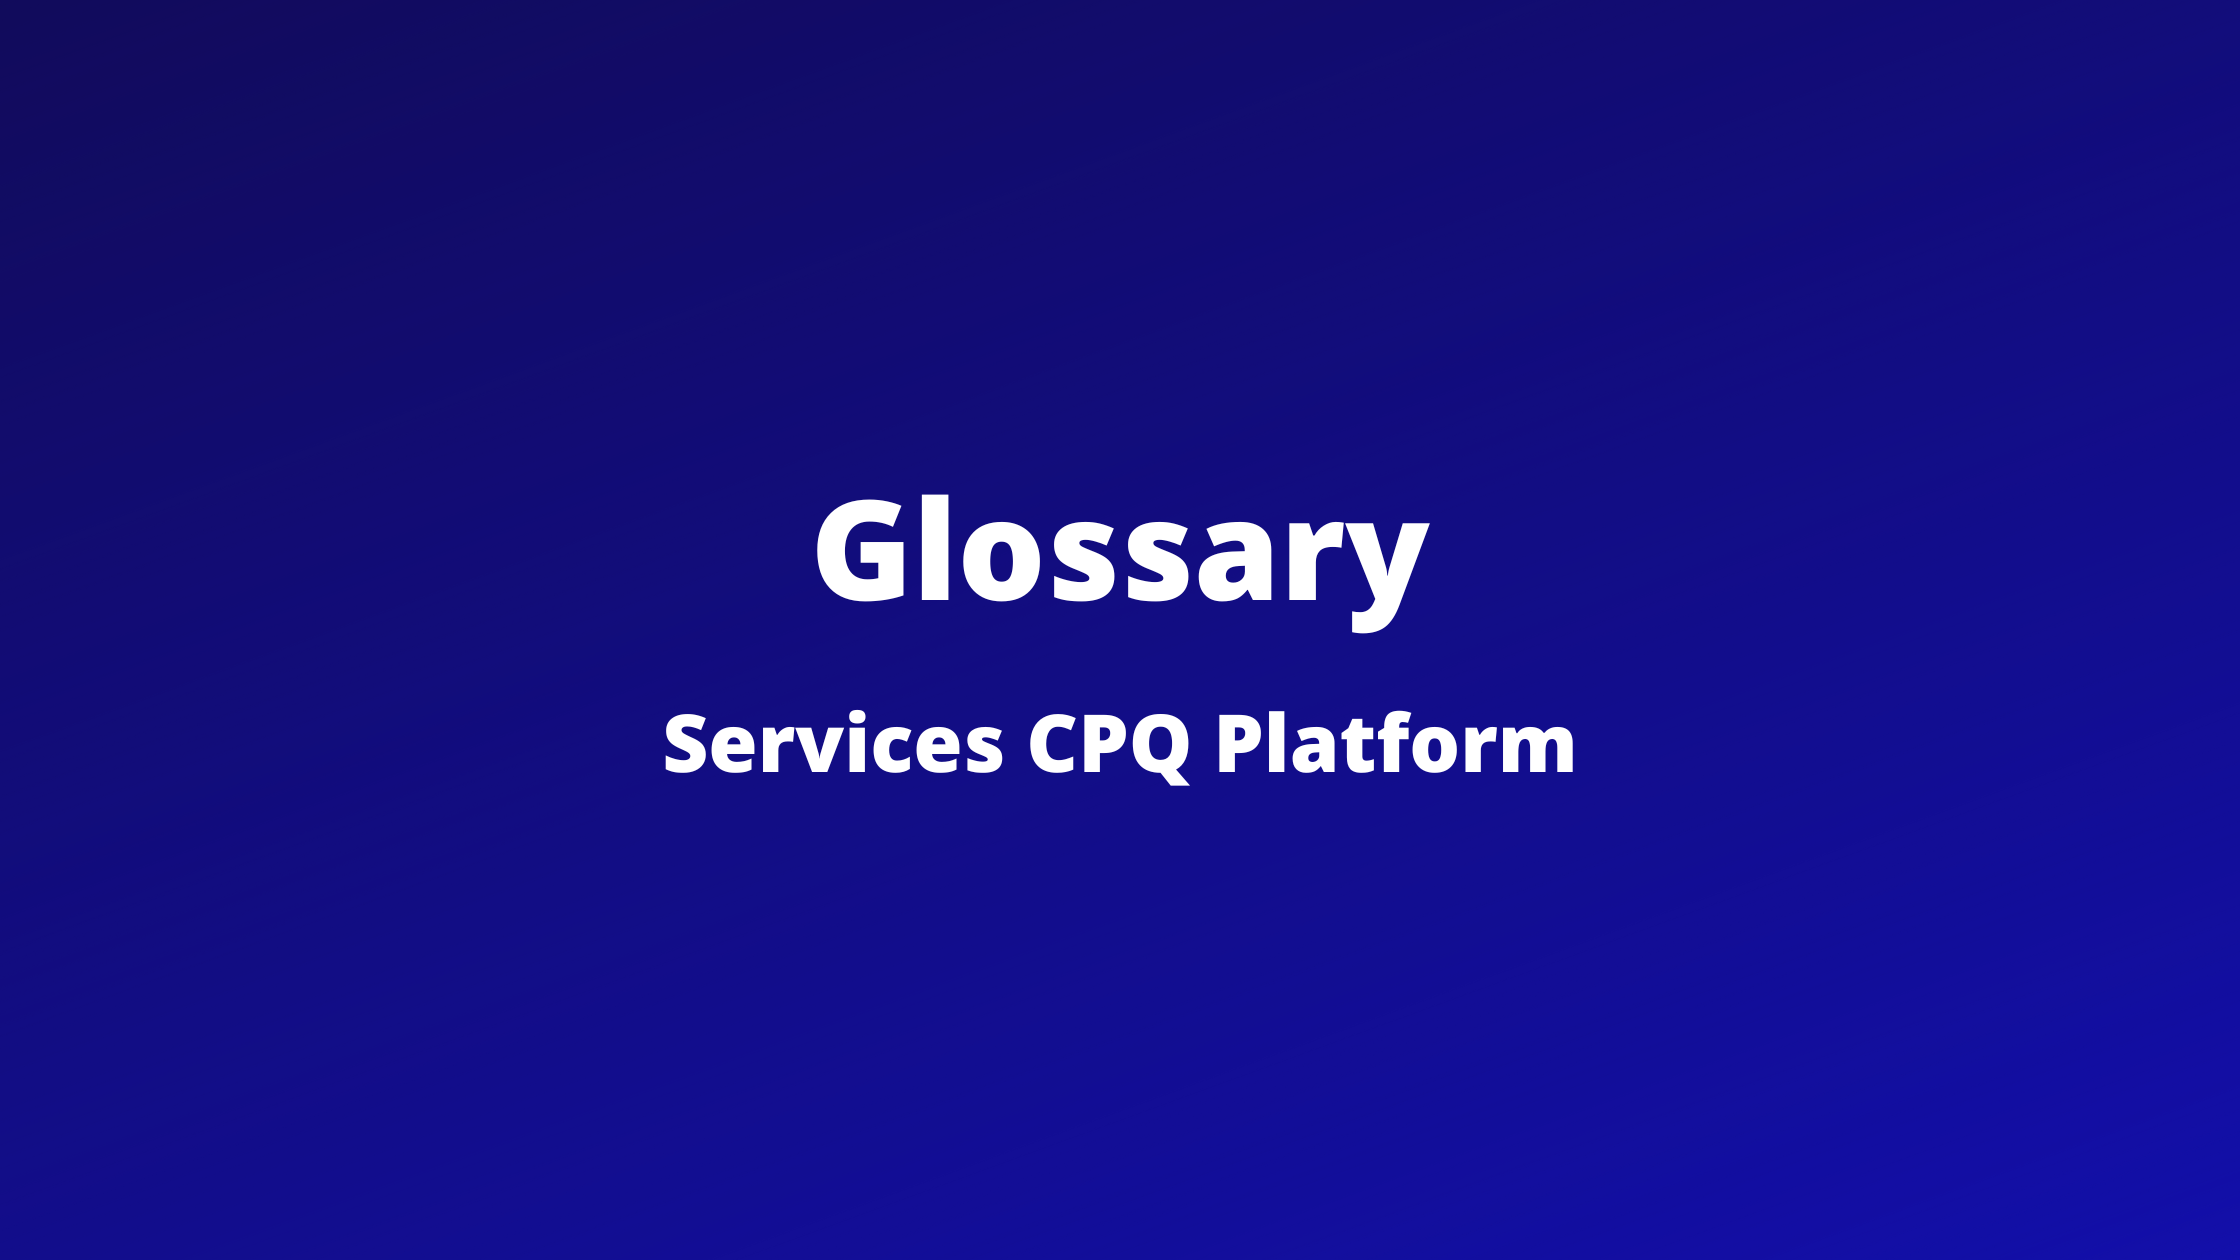 Services CPQ Platform